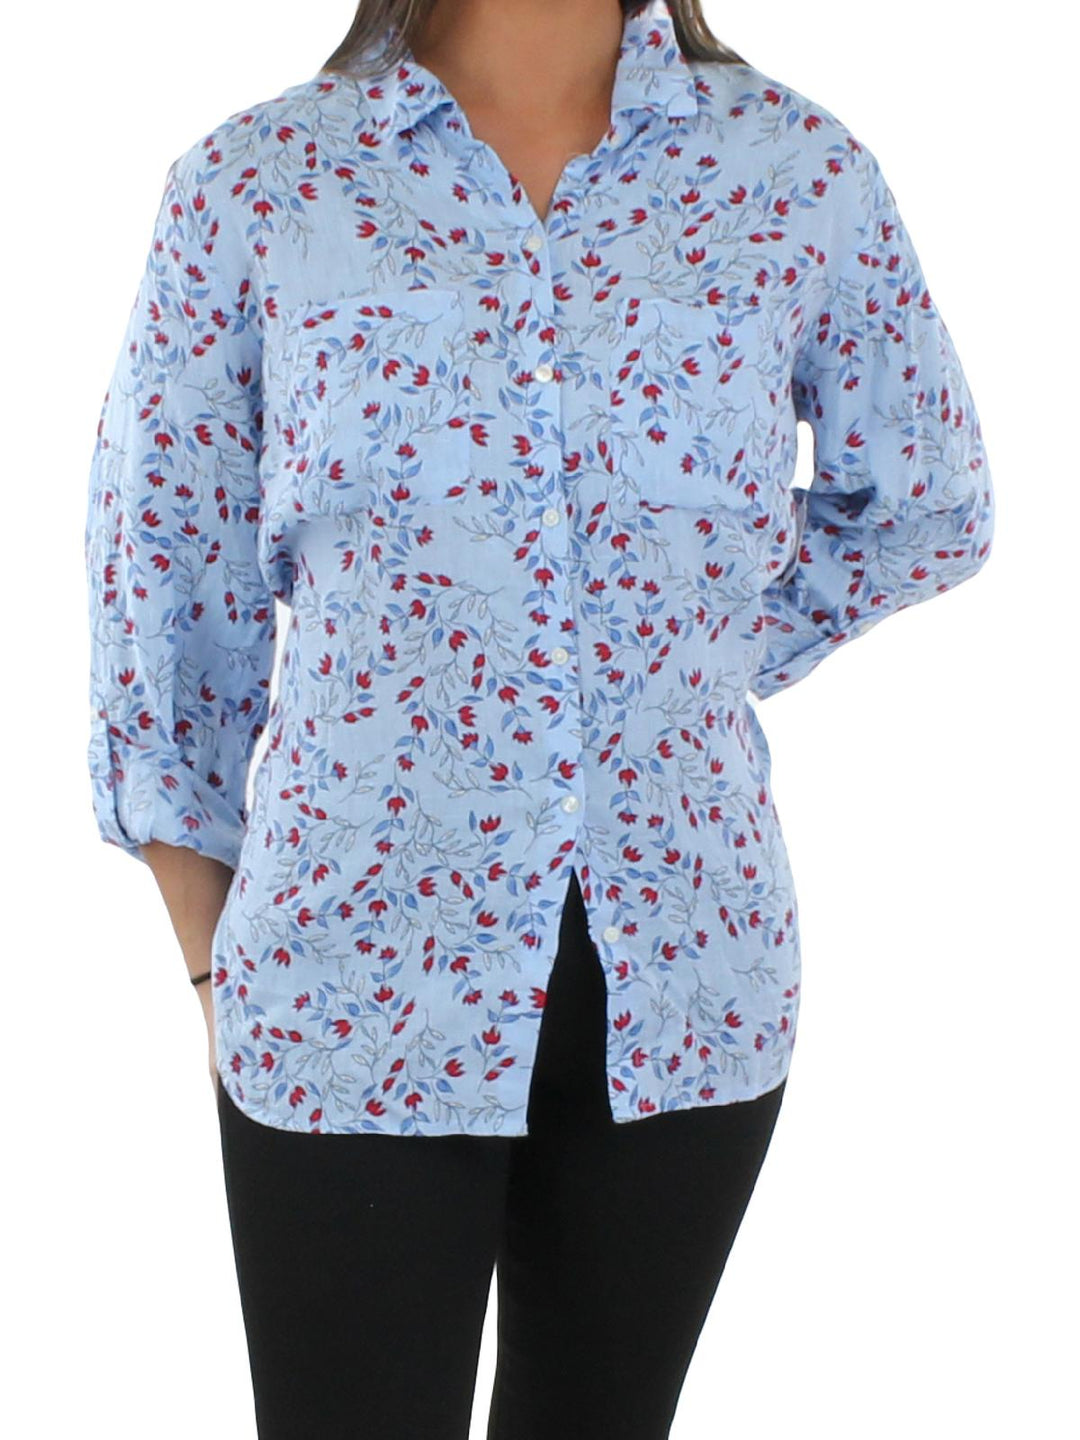 Charter Club Women's Floral Linen Button Down Top Blue Size Large